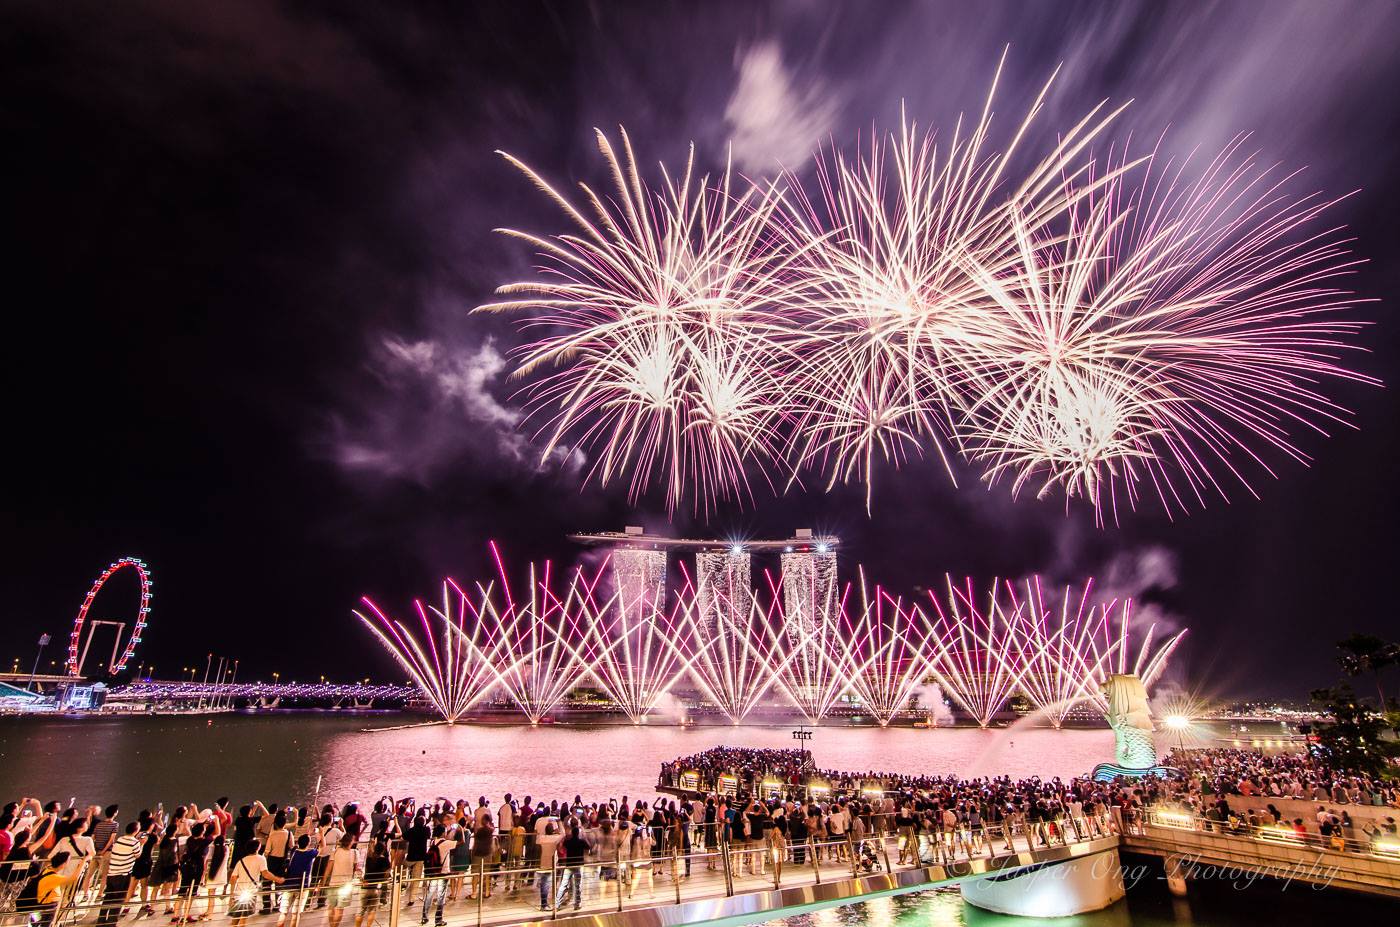 best fireworks viewing spots in singapore - Esplanade bridge